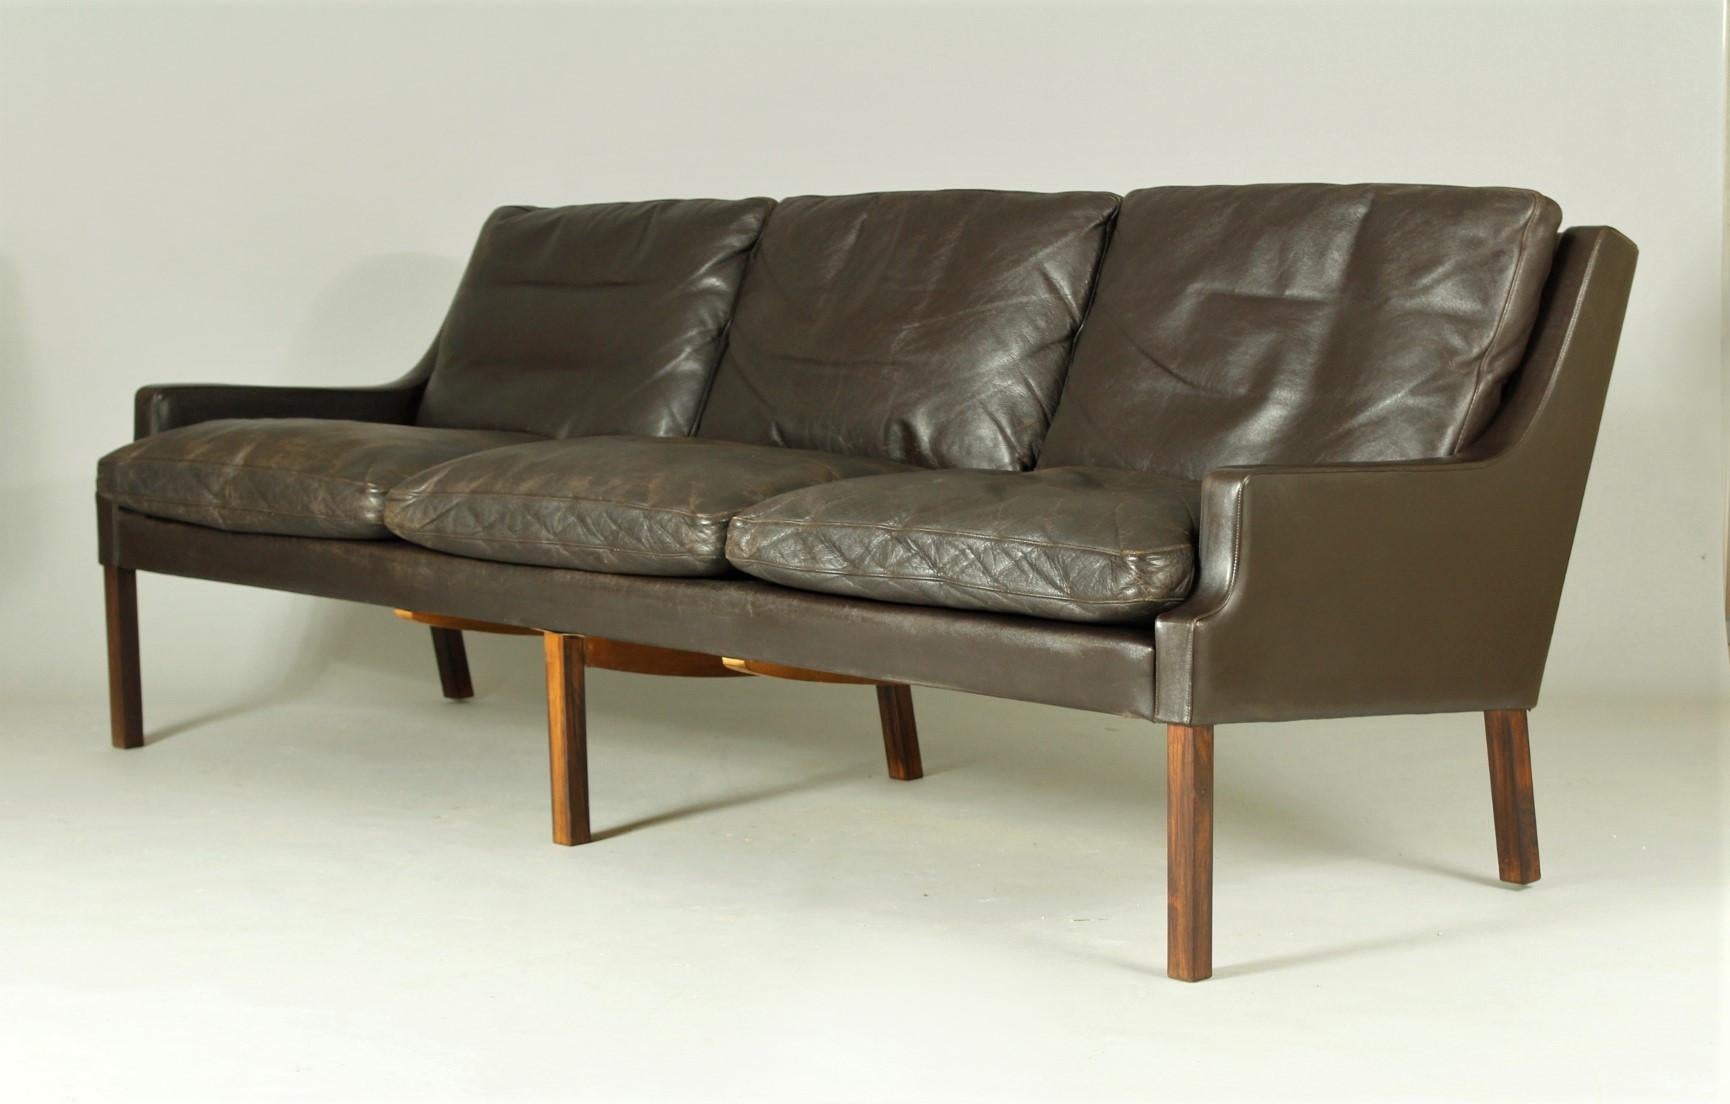 Danish 1960s Leather Sofa by Rud Thygesen for AS Vejen Polstermøbelfabrik, Denmark